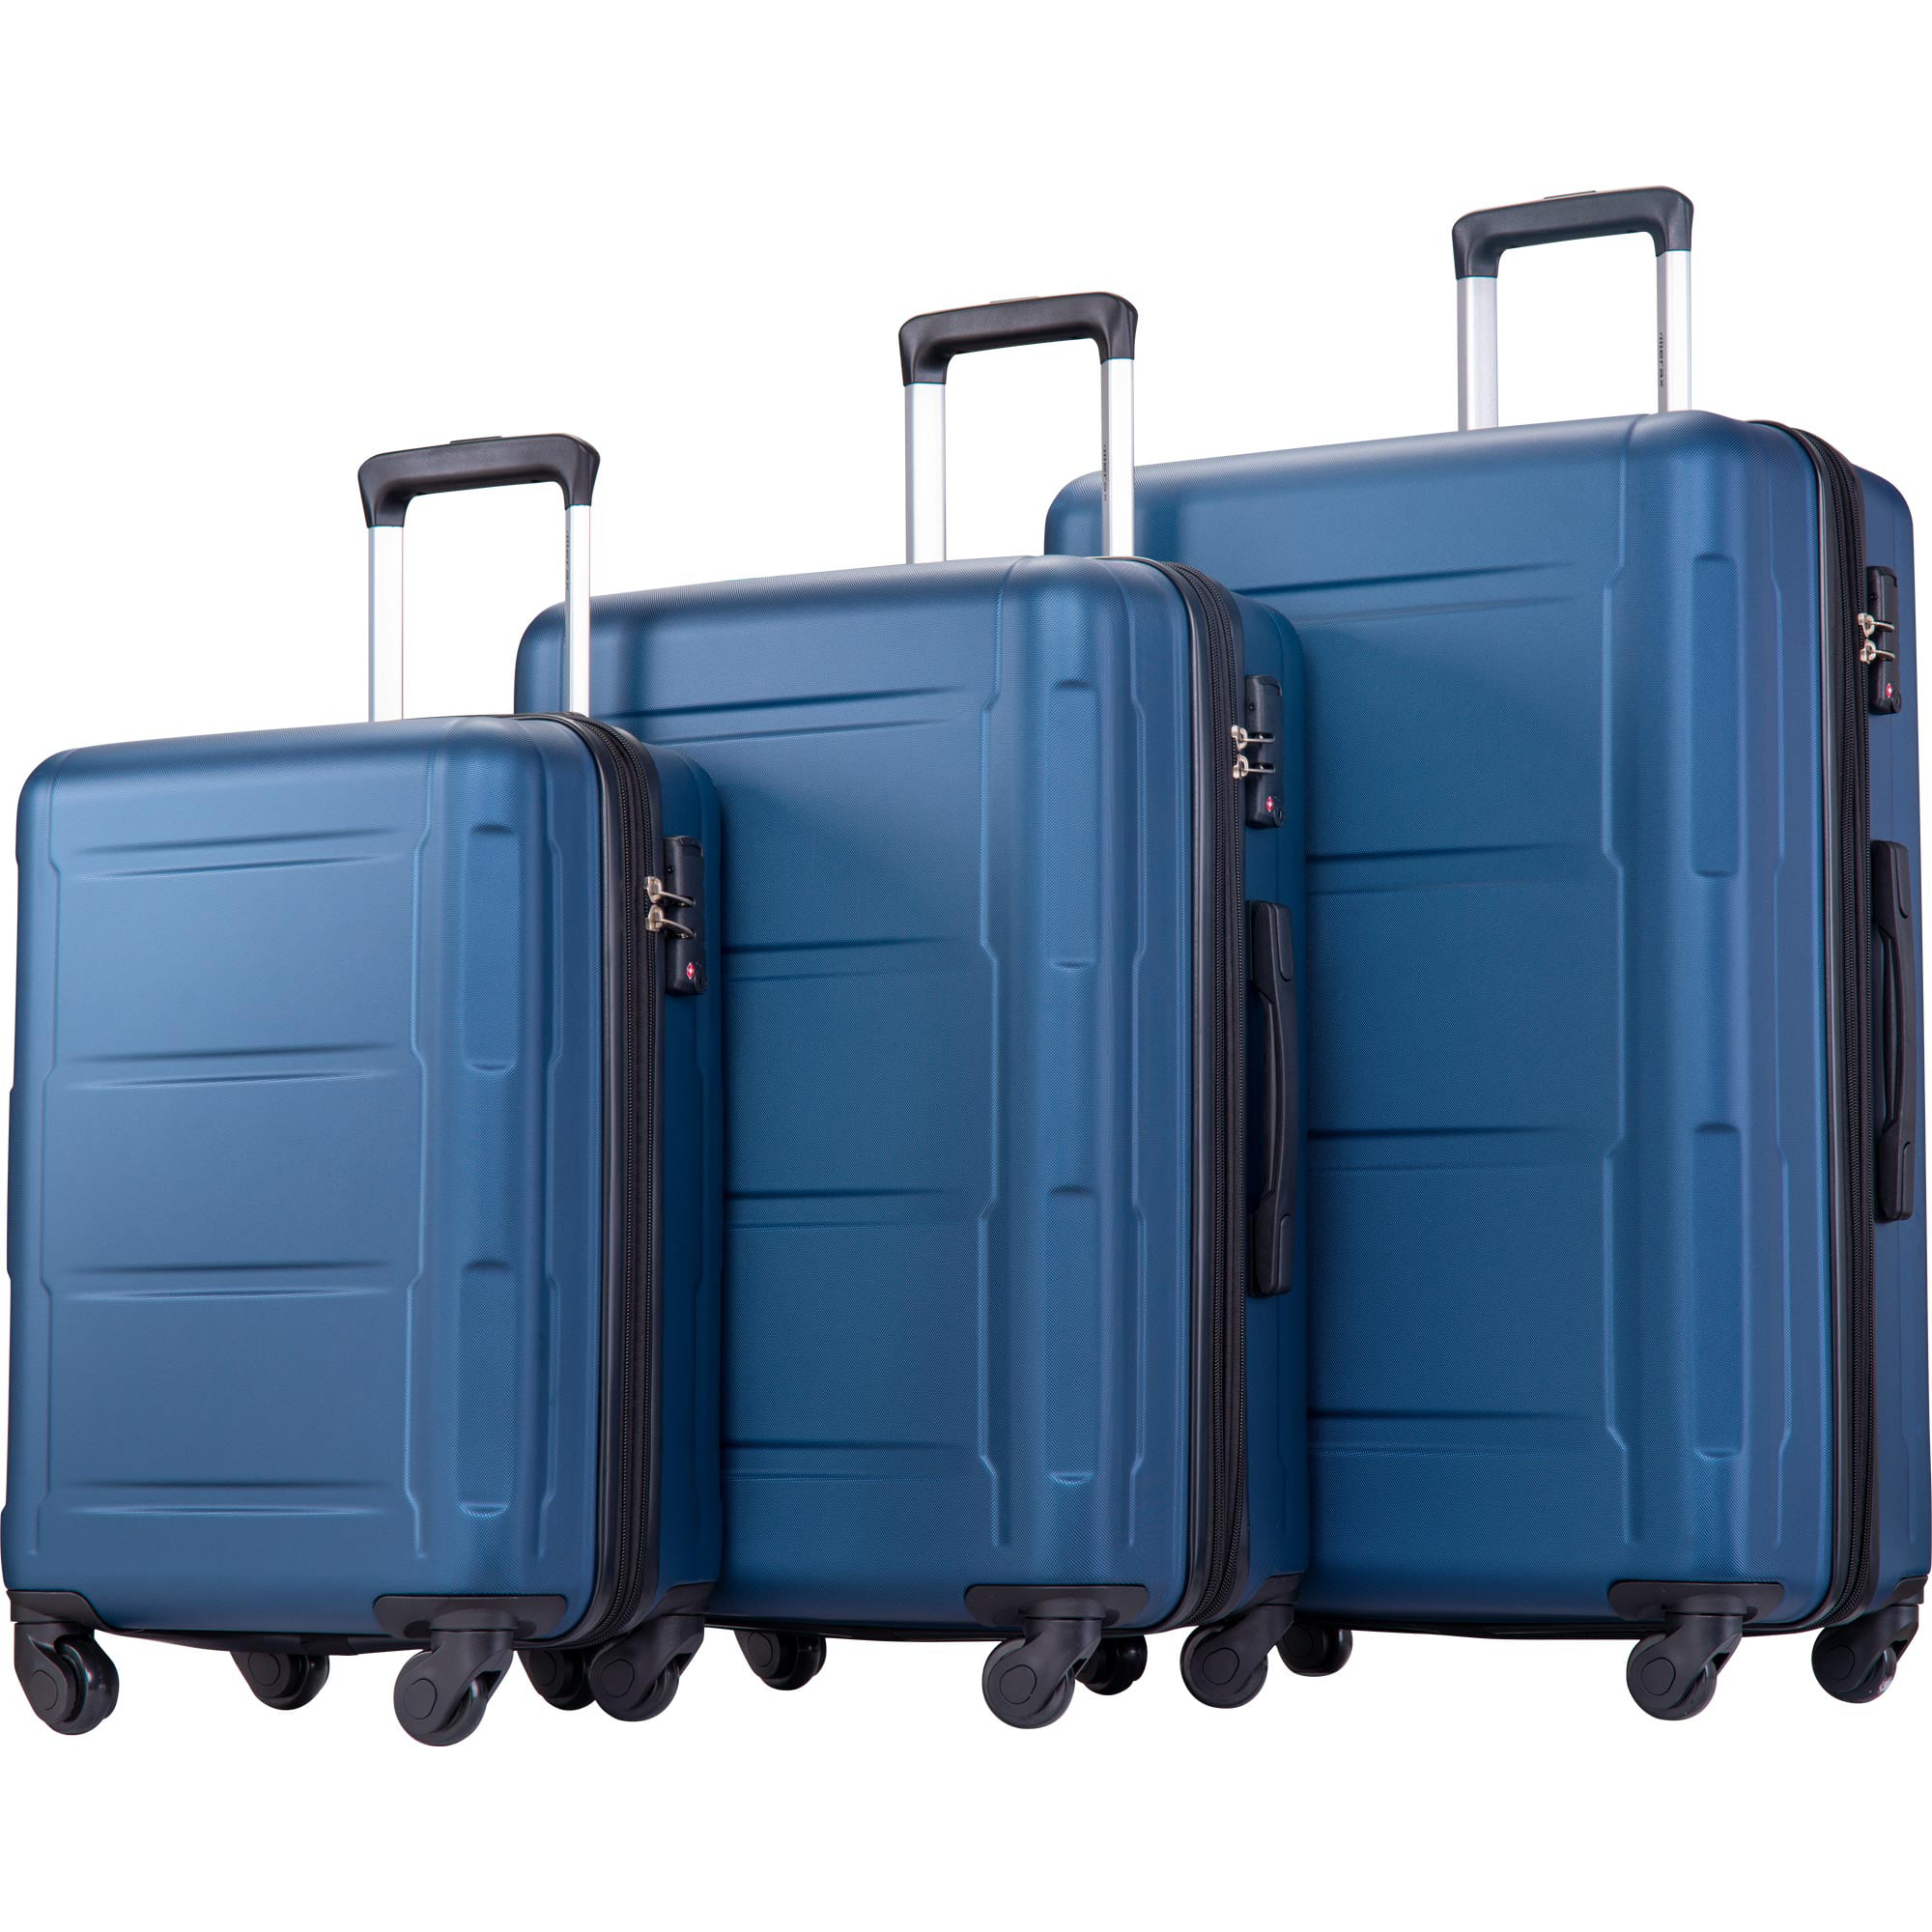 3 Piece Expandable Luggage Sets, SEGMART Carry on Suitcase with TSA ...